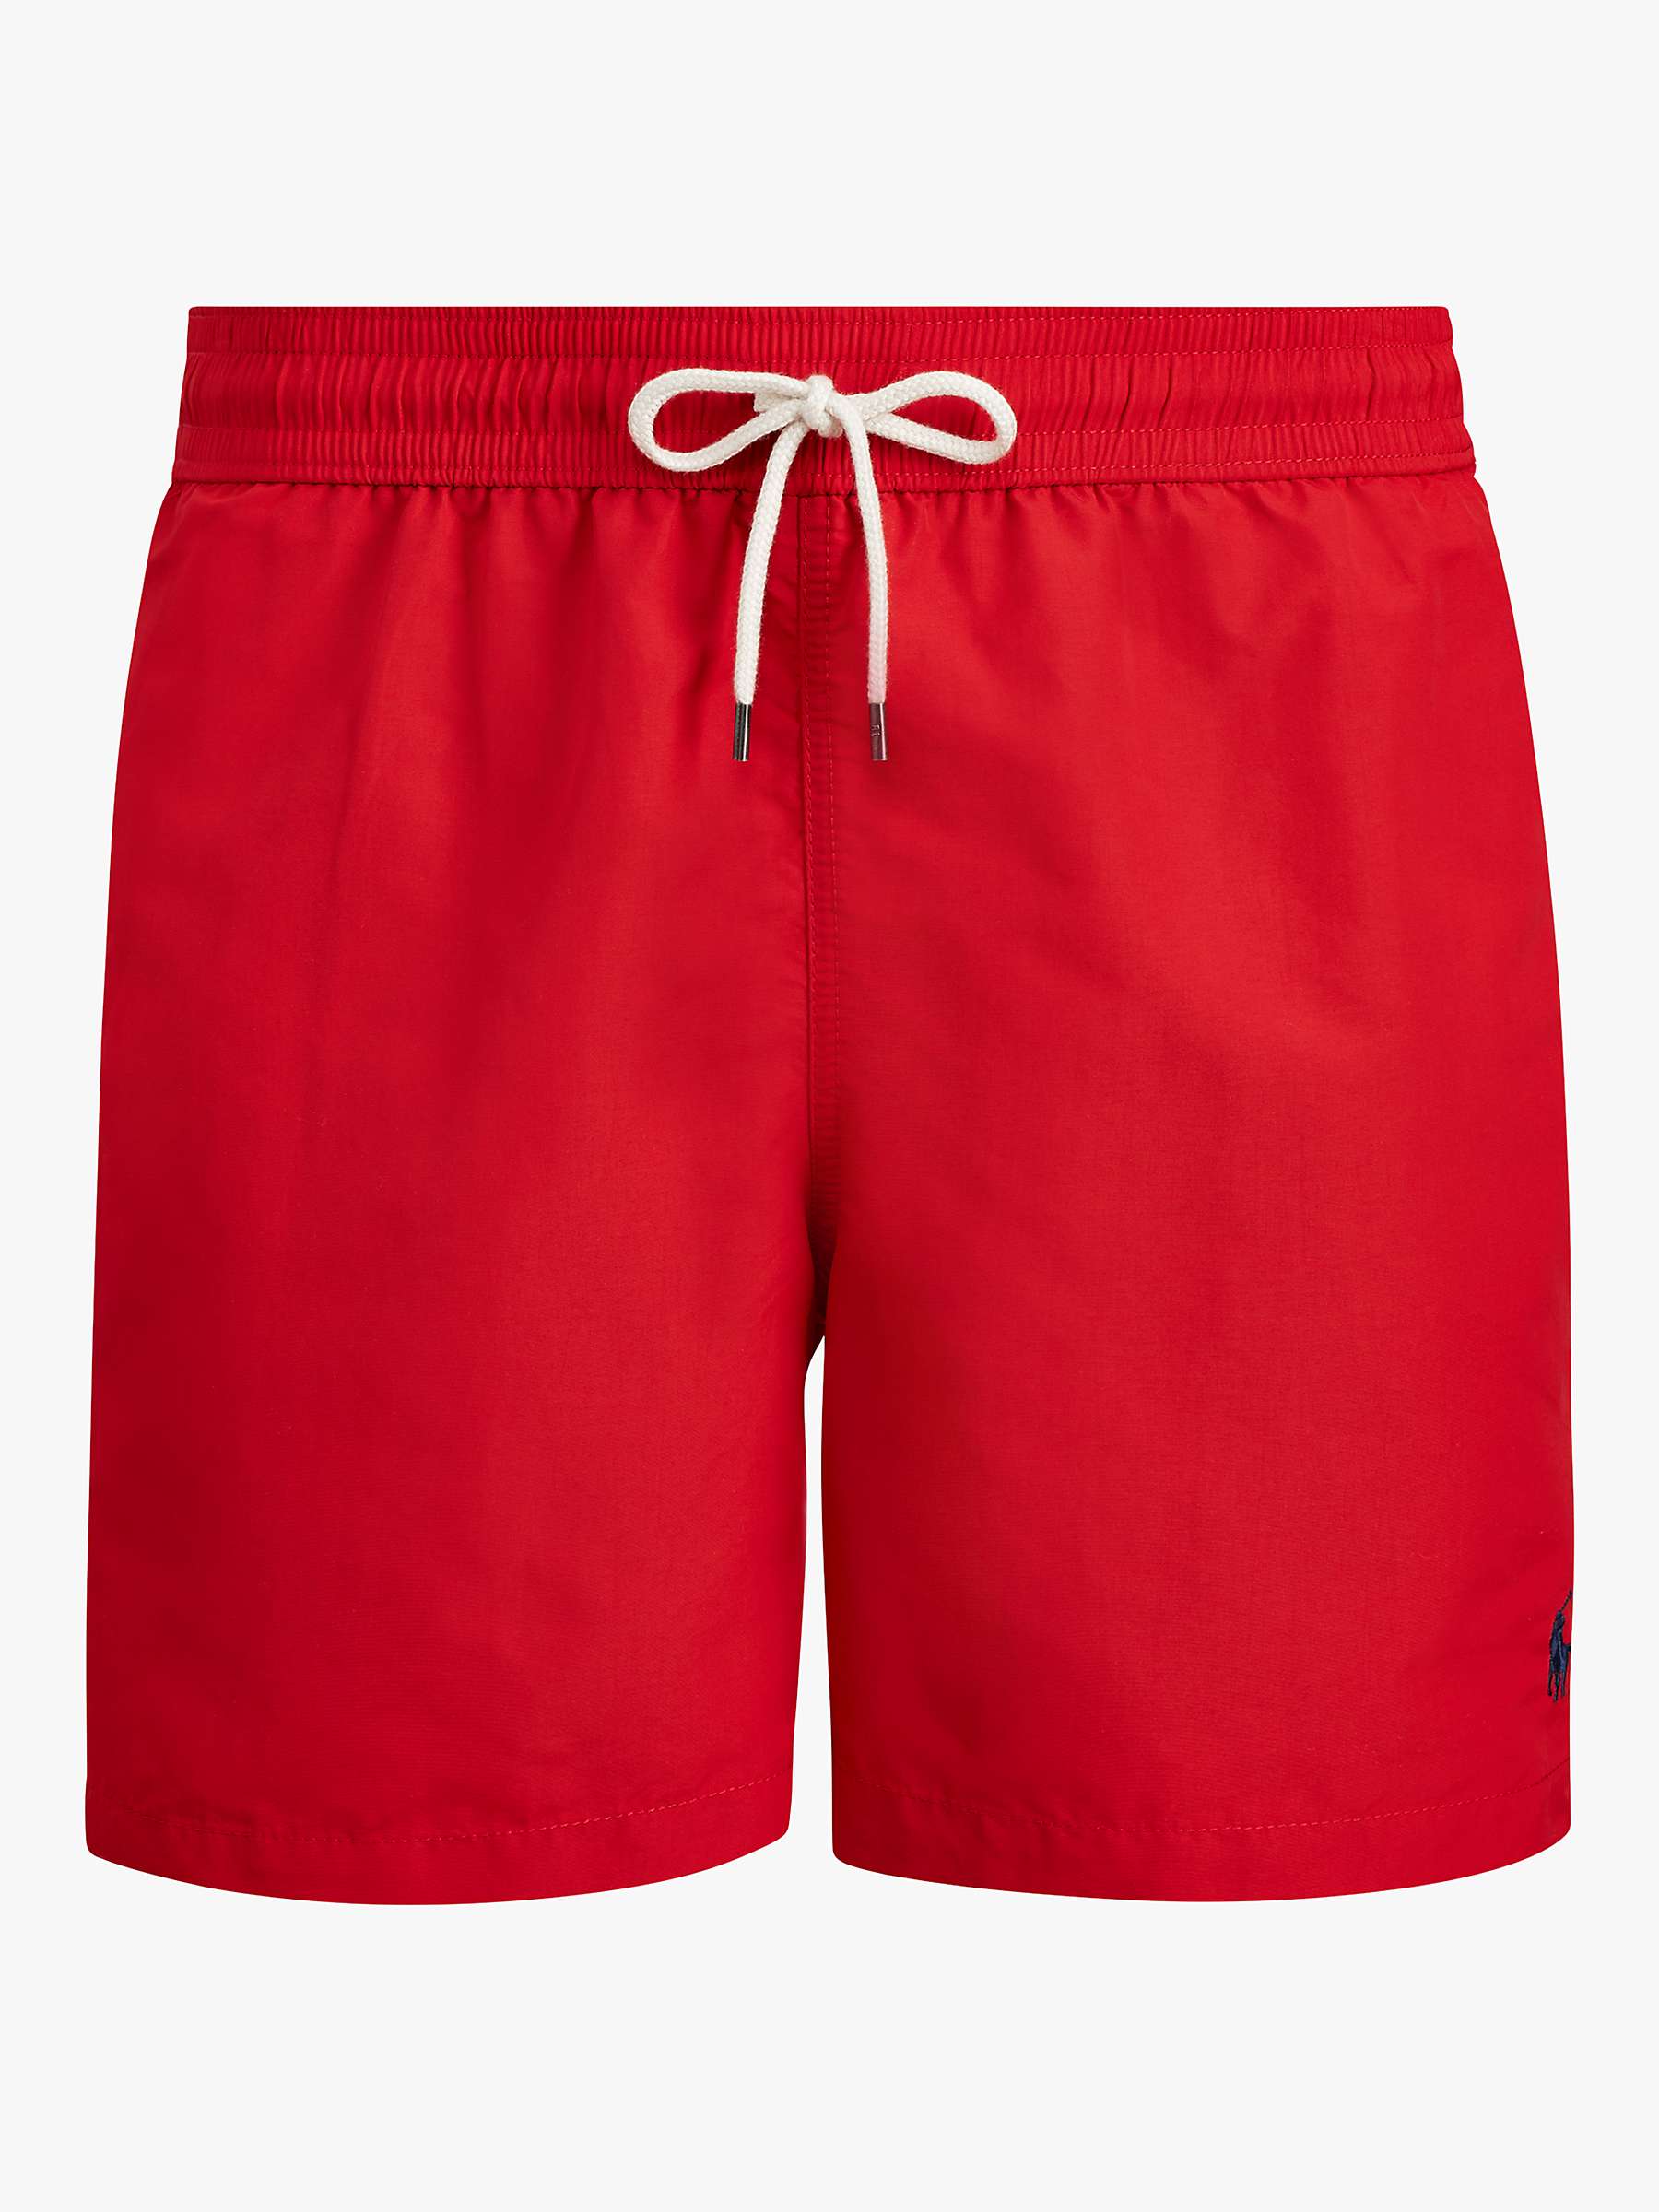 Buy Polo Ralph Lauren Traveller Swim Shorts Online at johnlewis.com